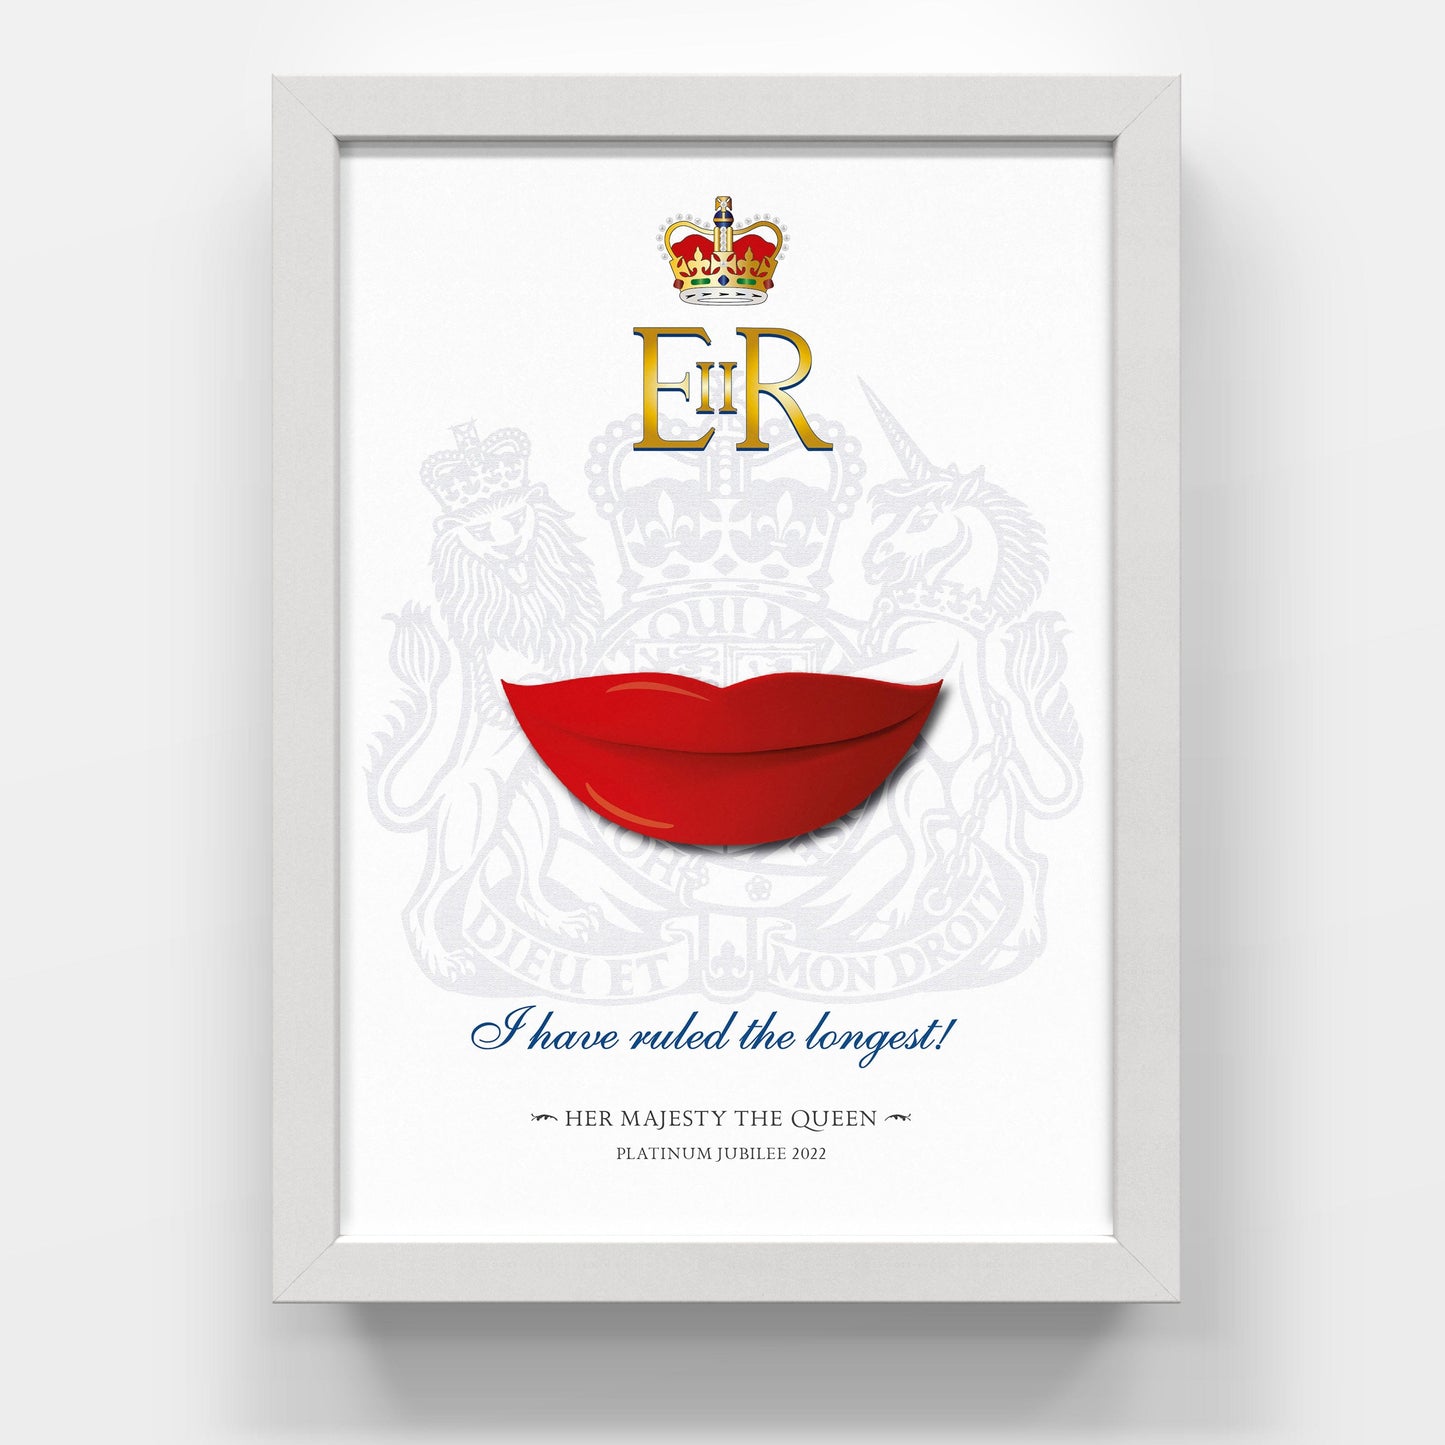 From the lips of HRH Queen Elizabeth II